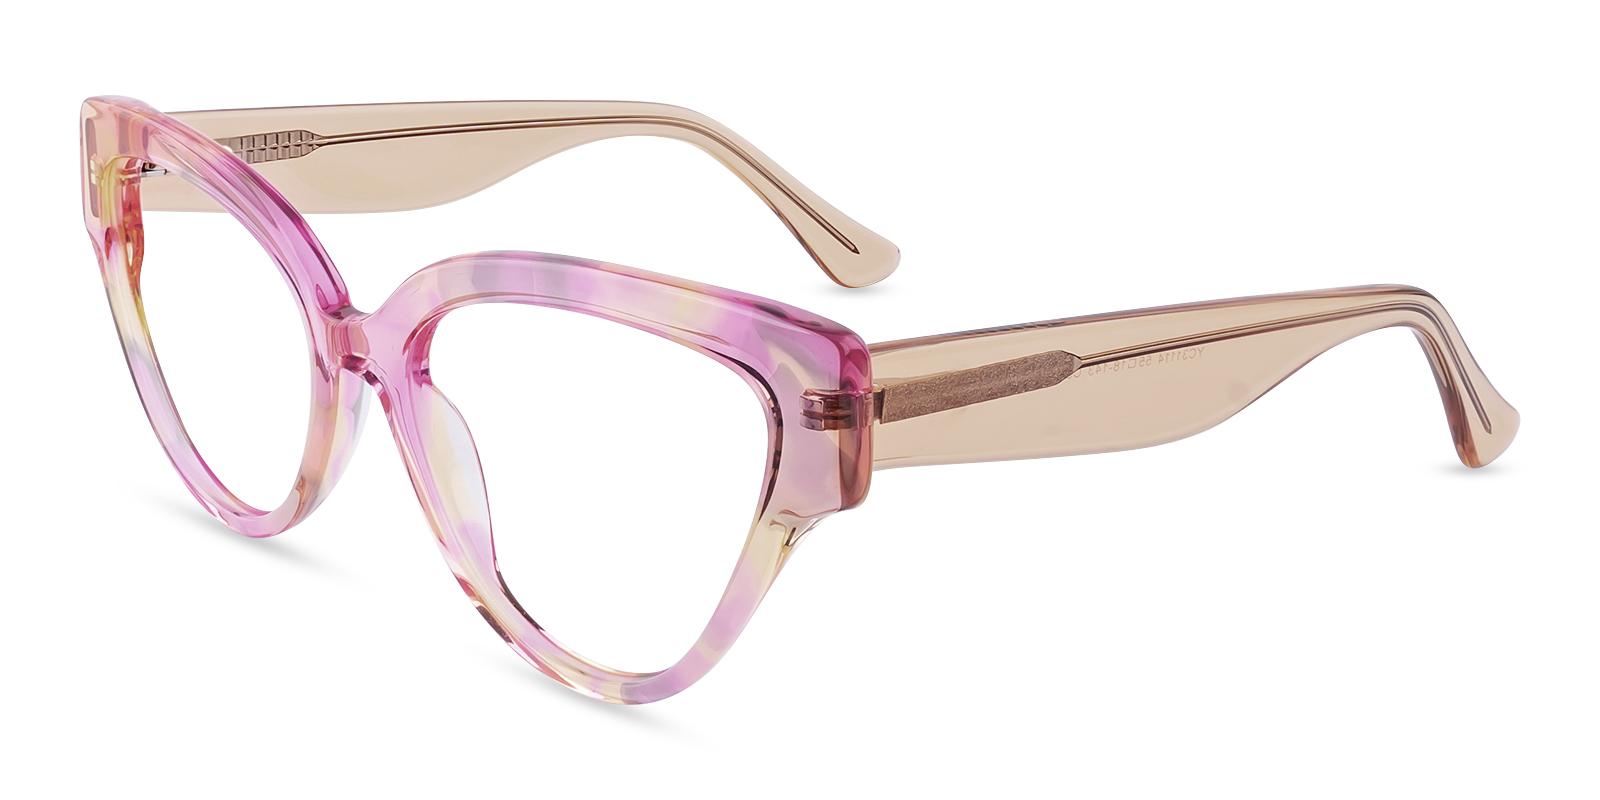 Schoolant Pattern Acetate Eyeglasses , SpringHinges , UniversalBridgeFit Frames from ABBE Glasses